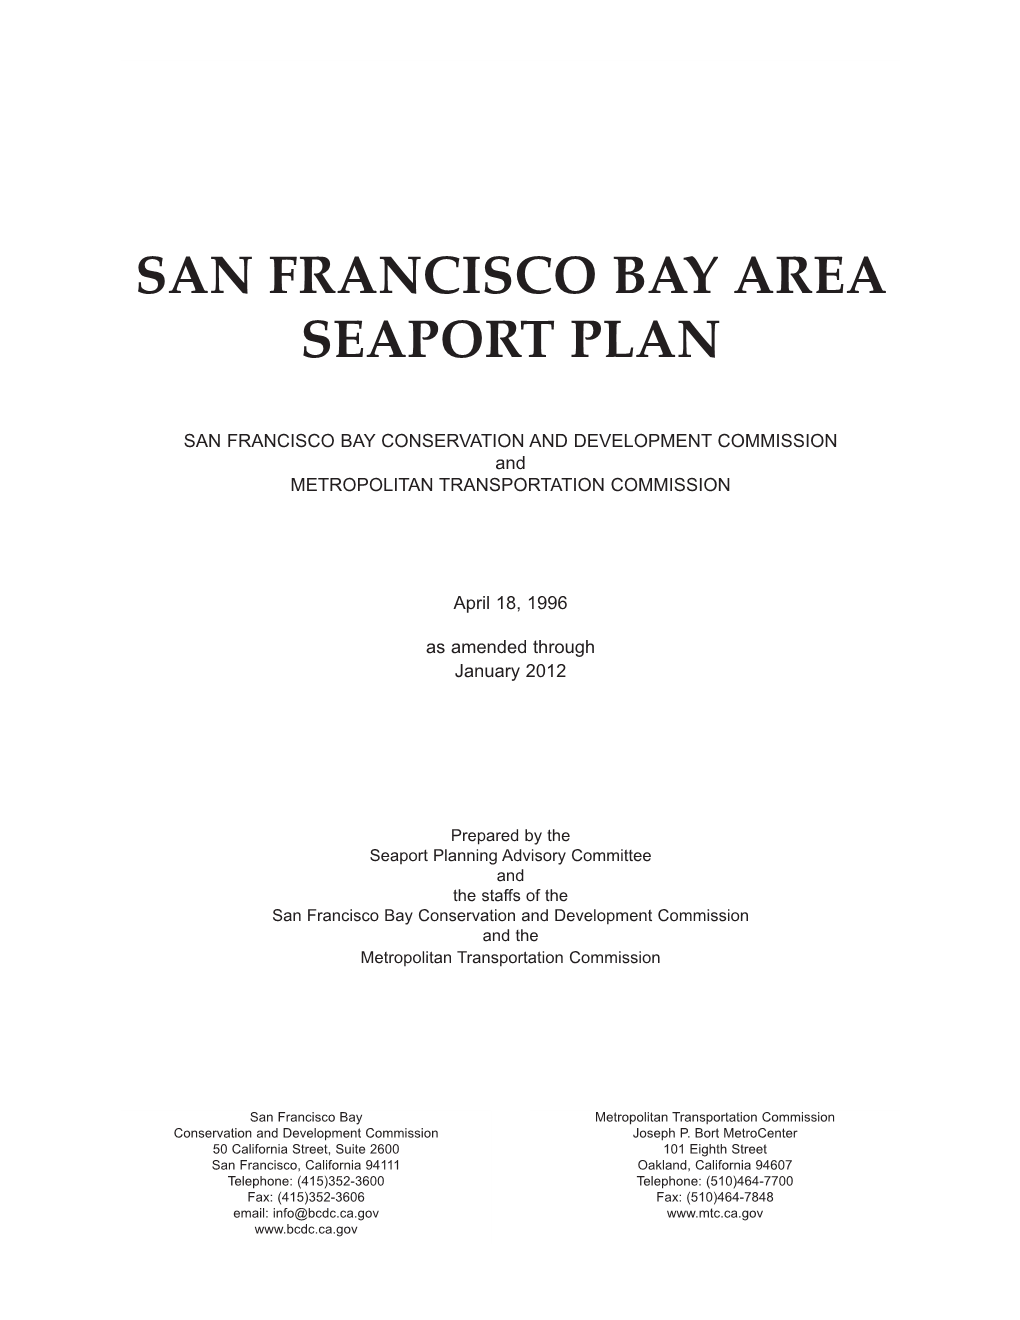 San Francisco Bay Area Seaport Plan